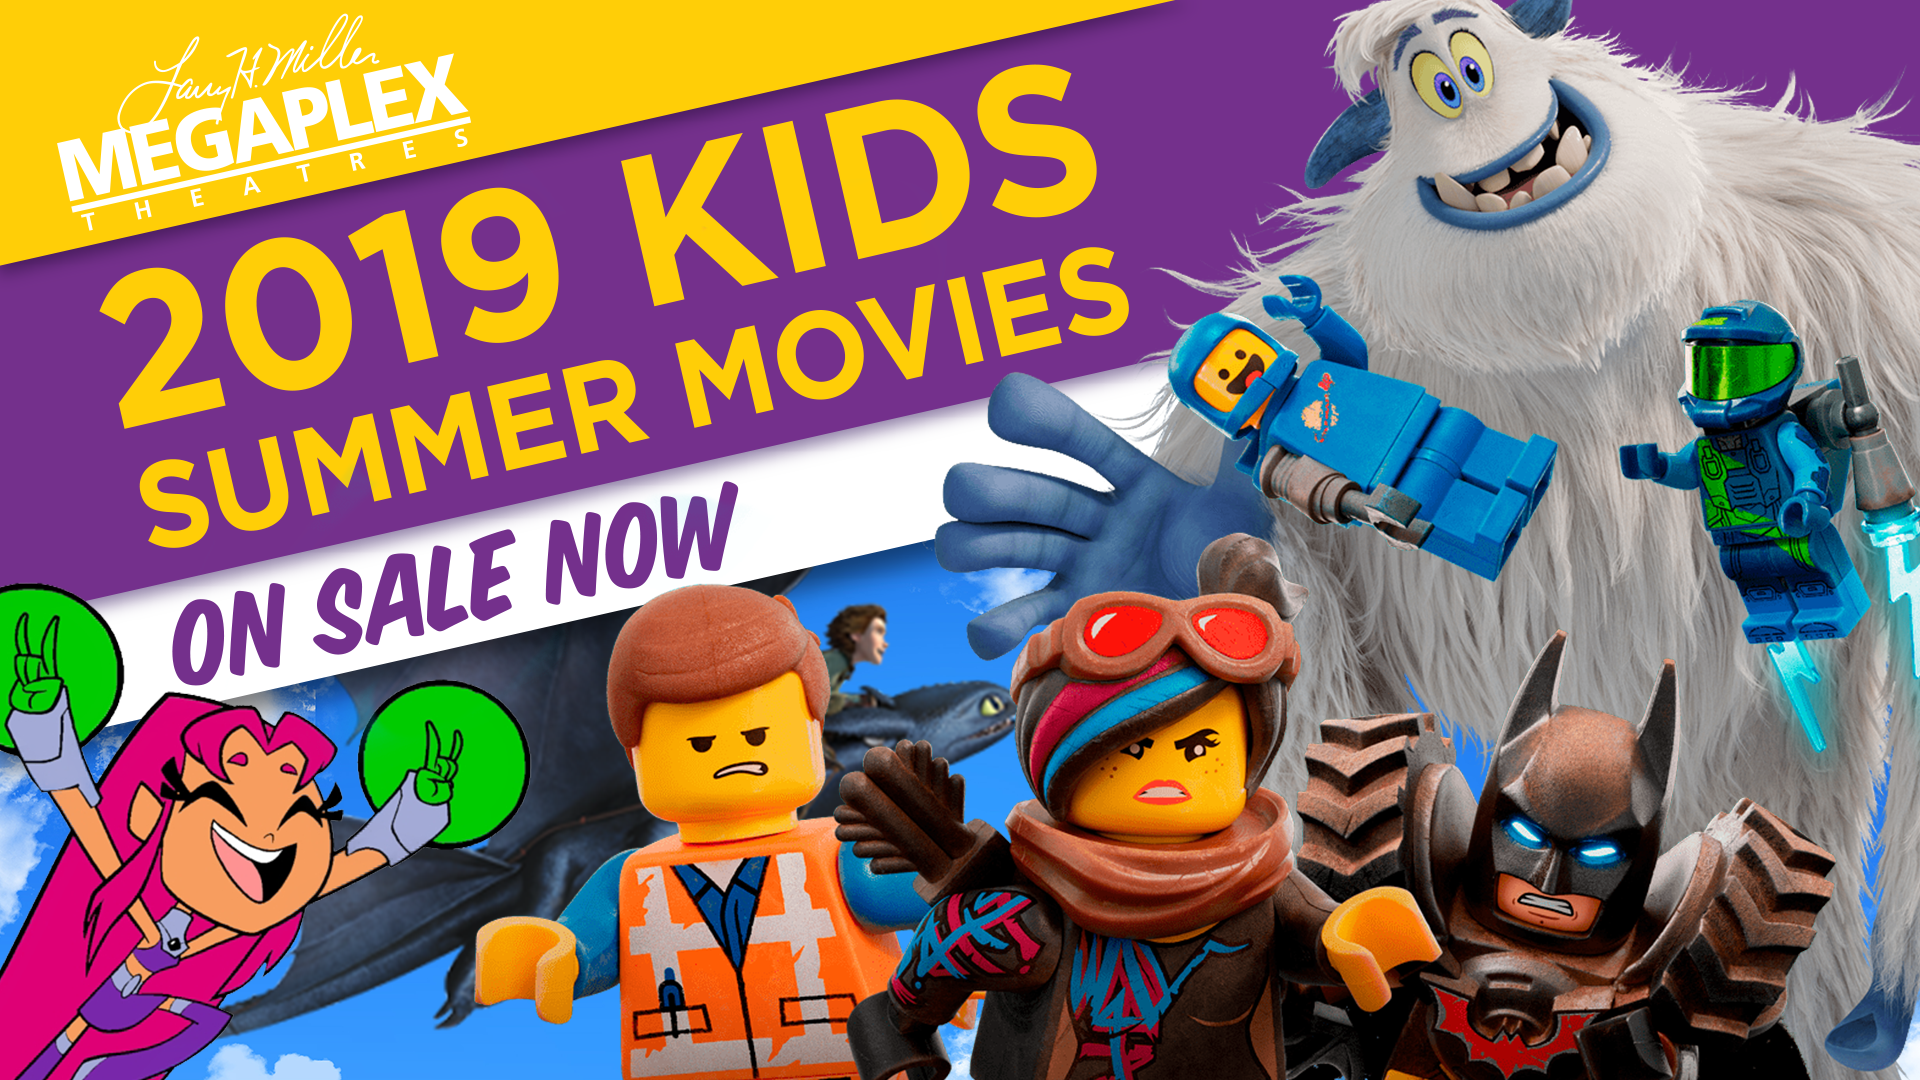 2019 Kids Summer Movies At Megaplex Theatres